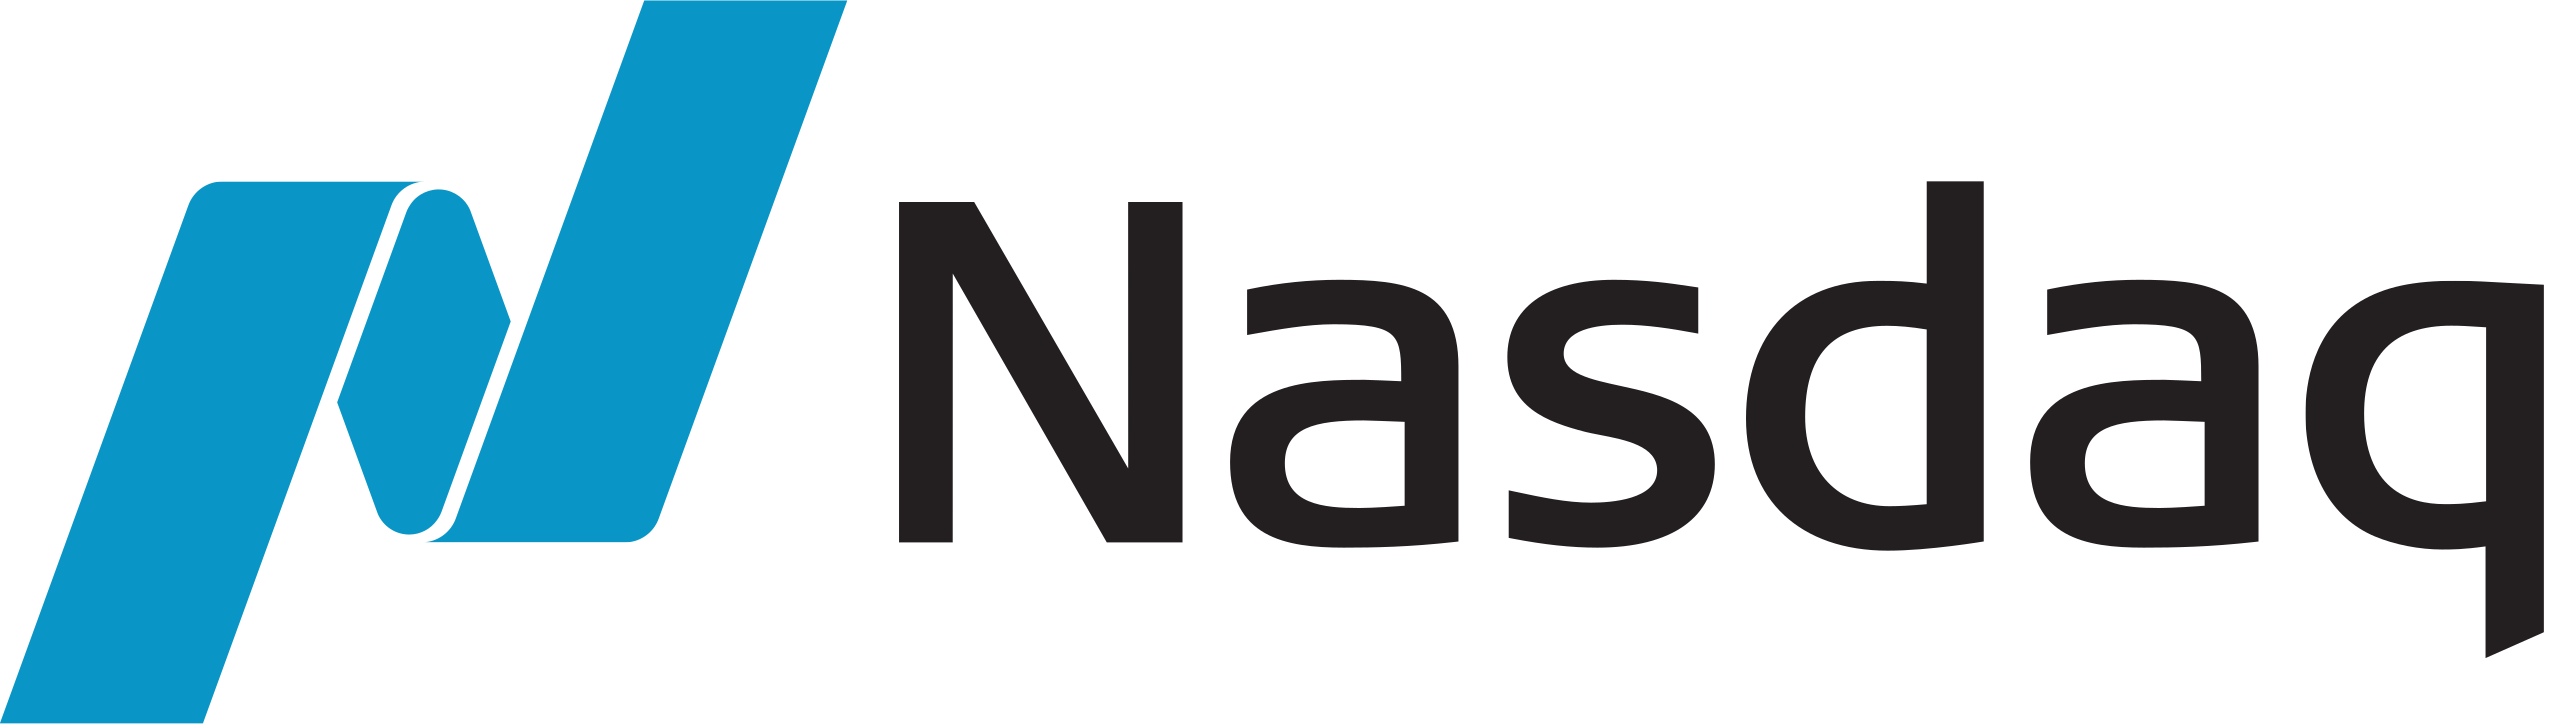 Archivo:Logotipo NASDAQ.svg - Wikimedia Commons